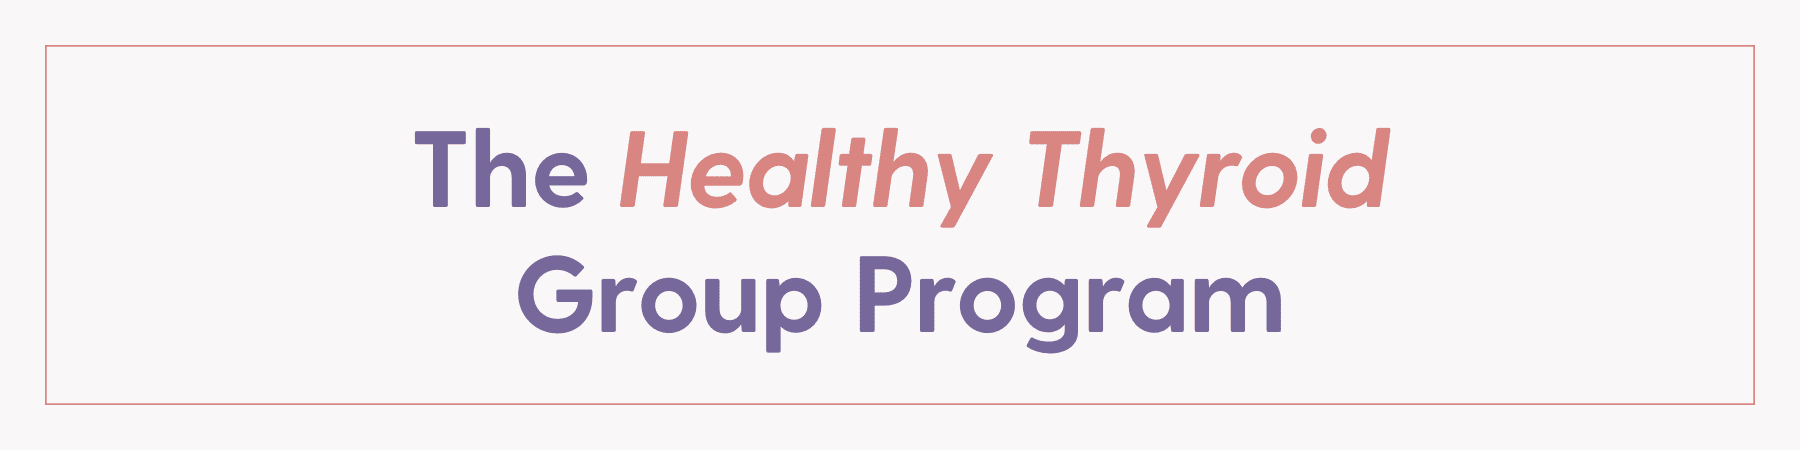 The Healthy Thyroid Group Program